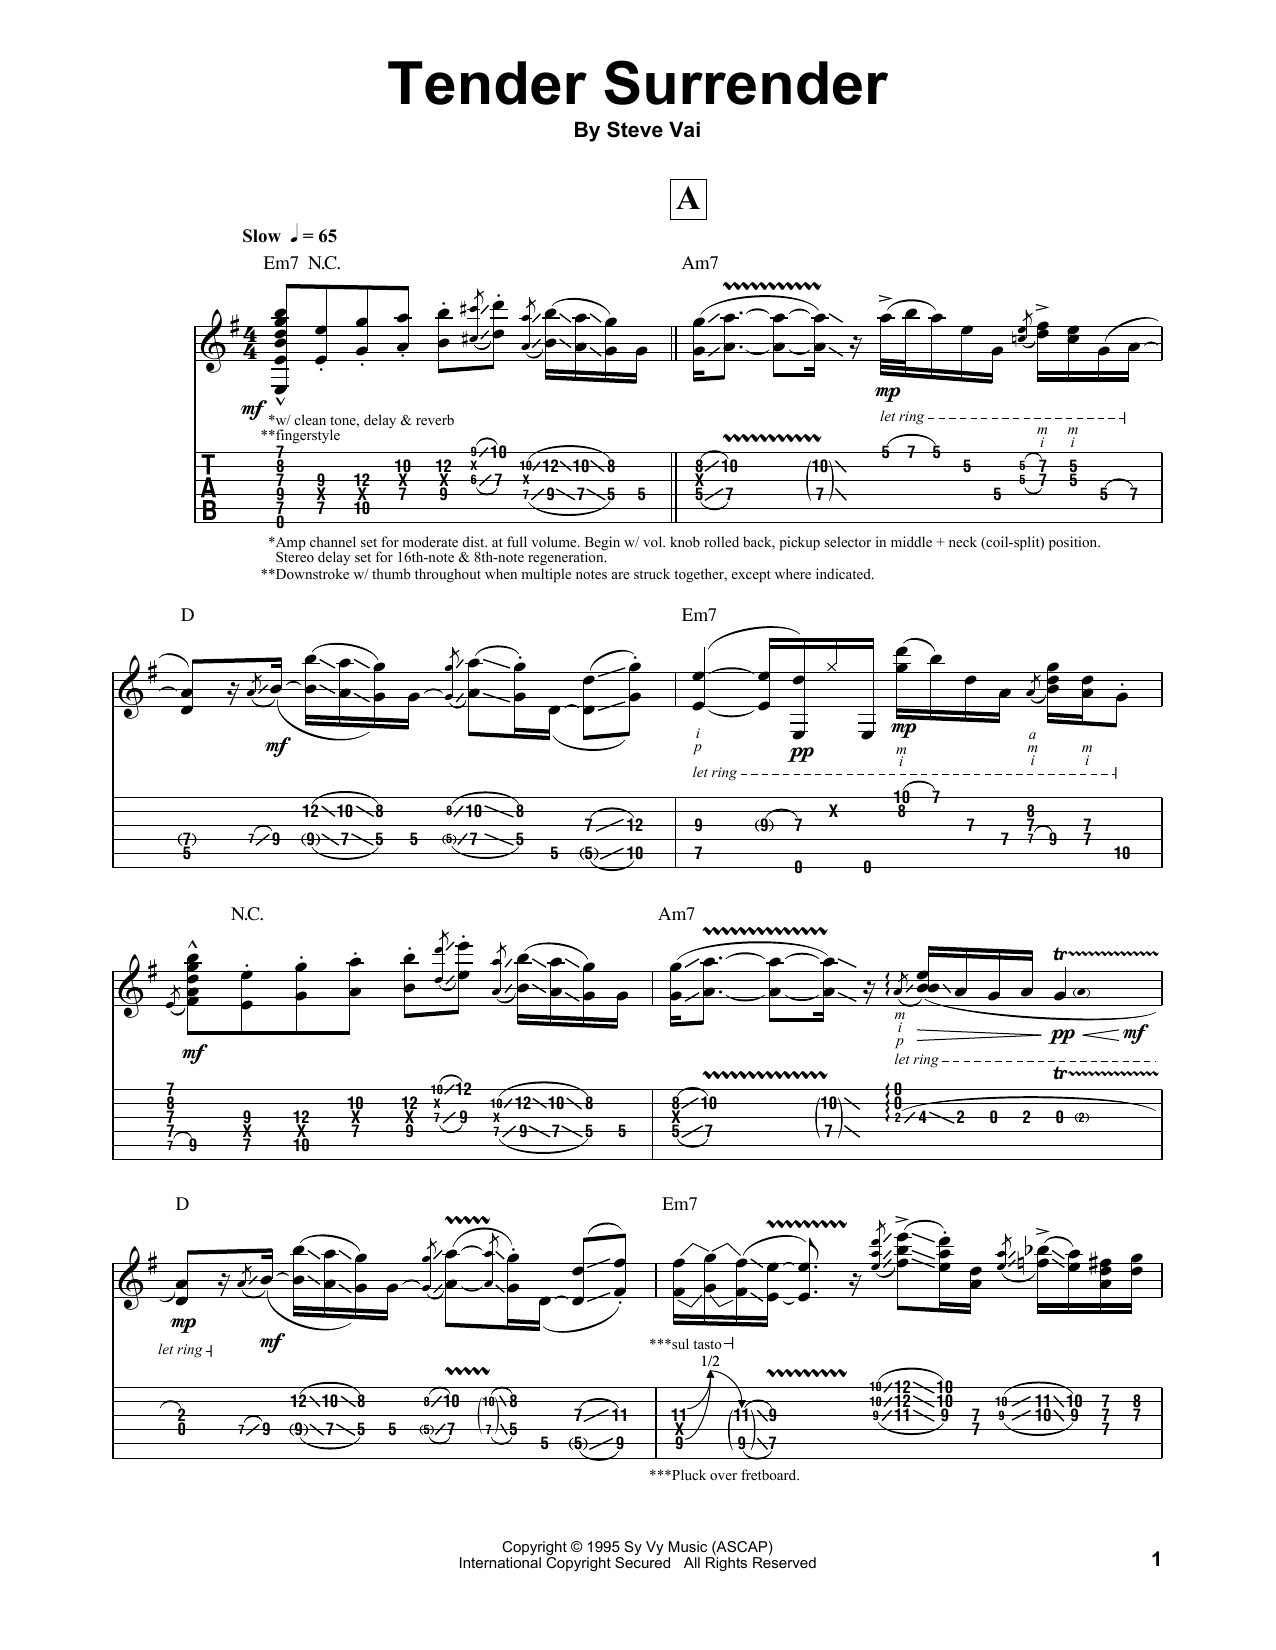 Steve Vai Tender Surrender Sheet Music Notes & Chords for Guitar Tab Play-Along - Download or Print PDF